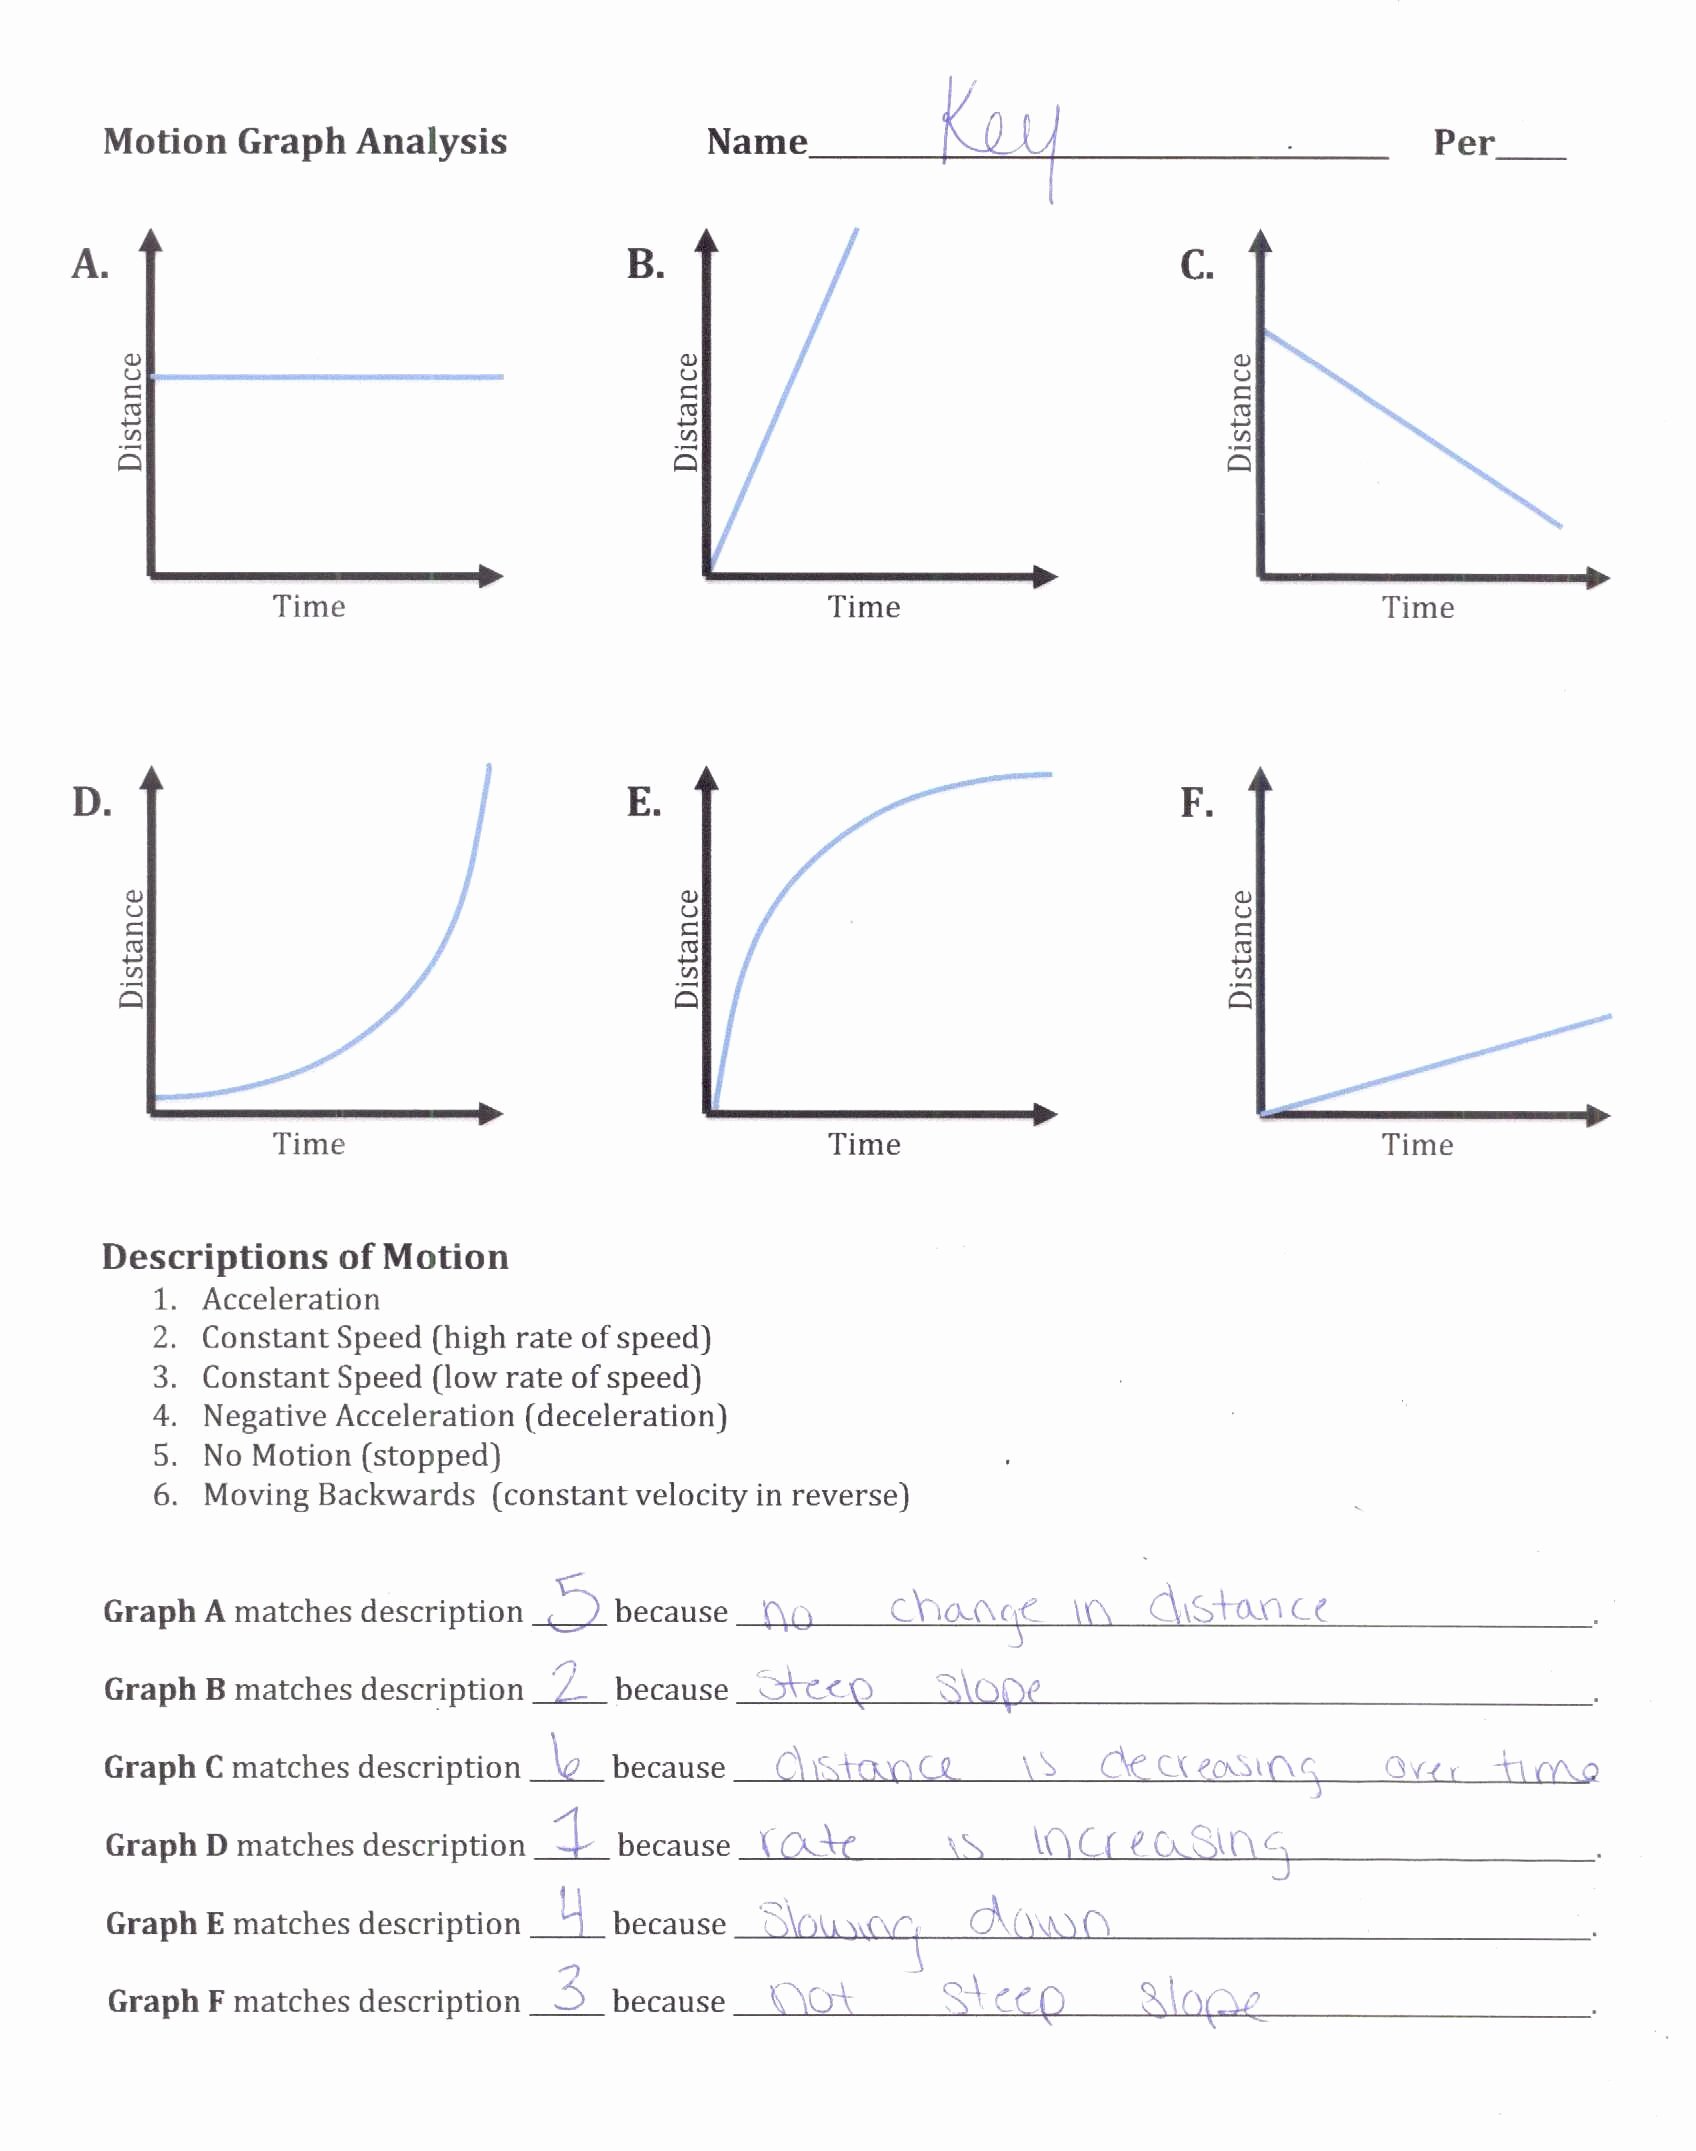 Motion Graphs Worksheet Answer Key Beautiful Motion Graphs Review Worksheet